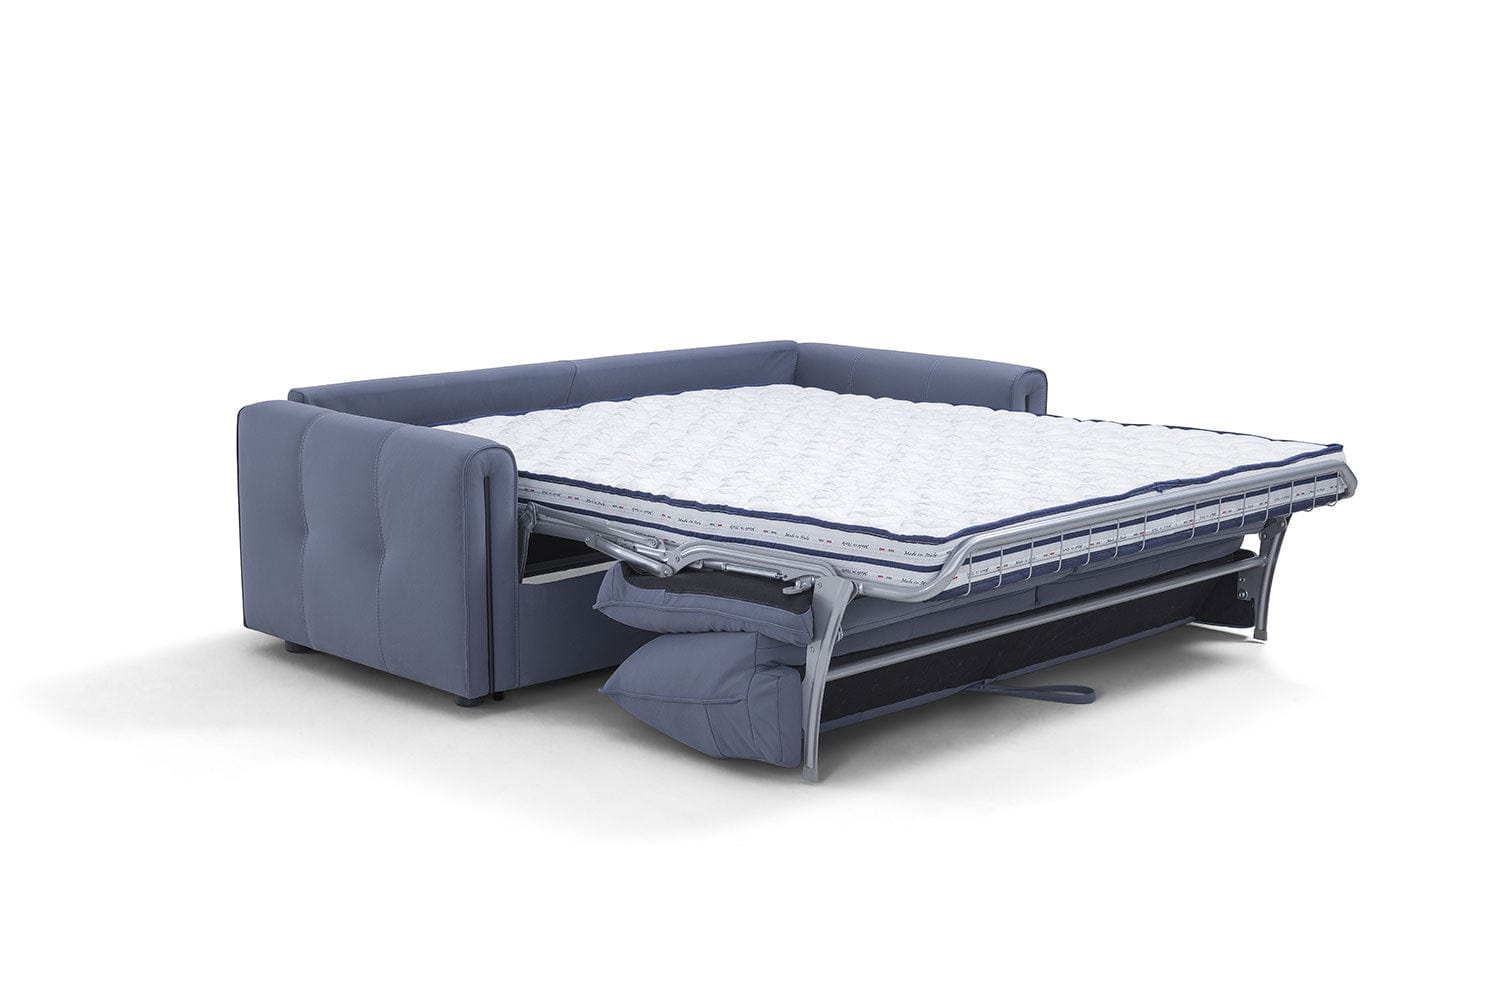 J and M Furniture Couches & Sofa i889 Premium Sleeper Sofa | Incanto